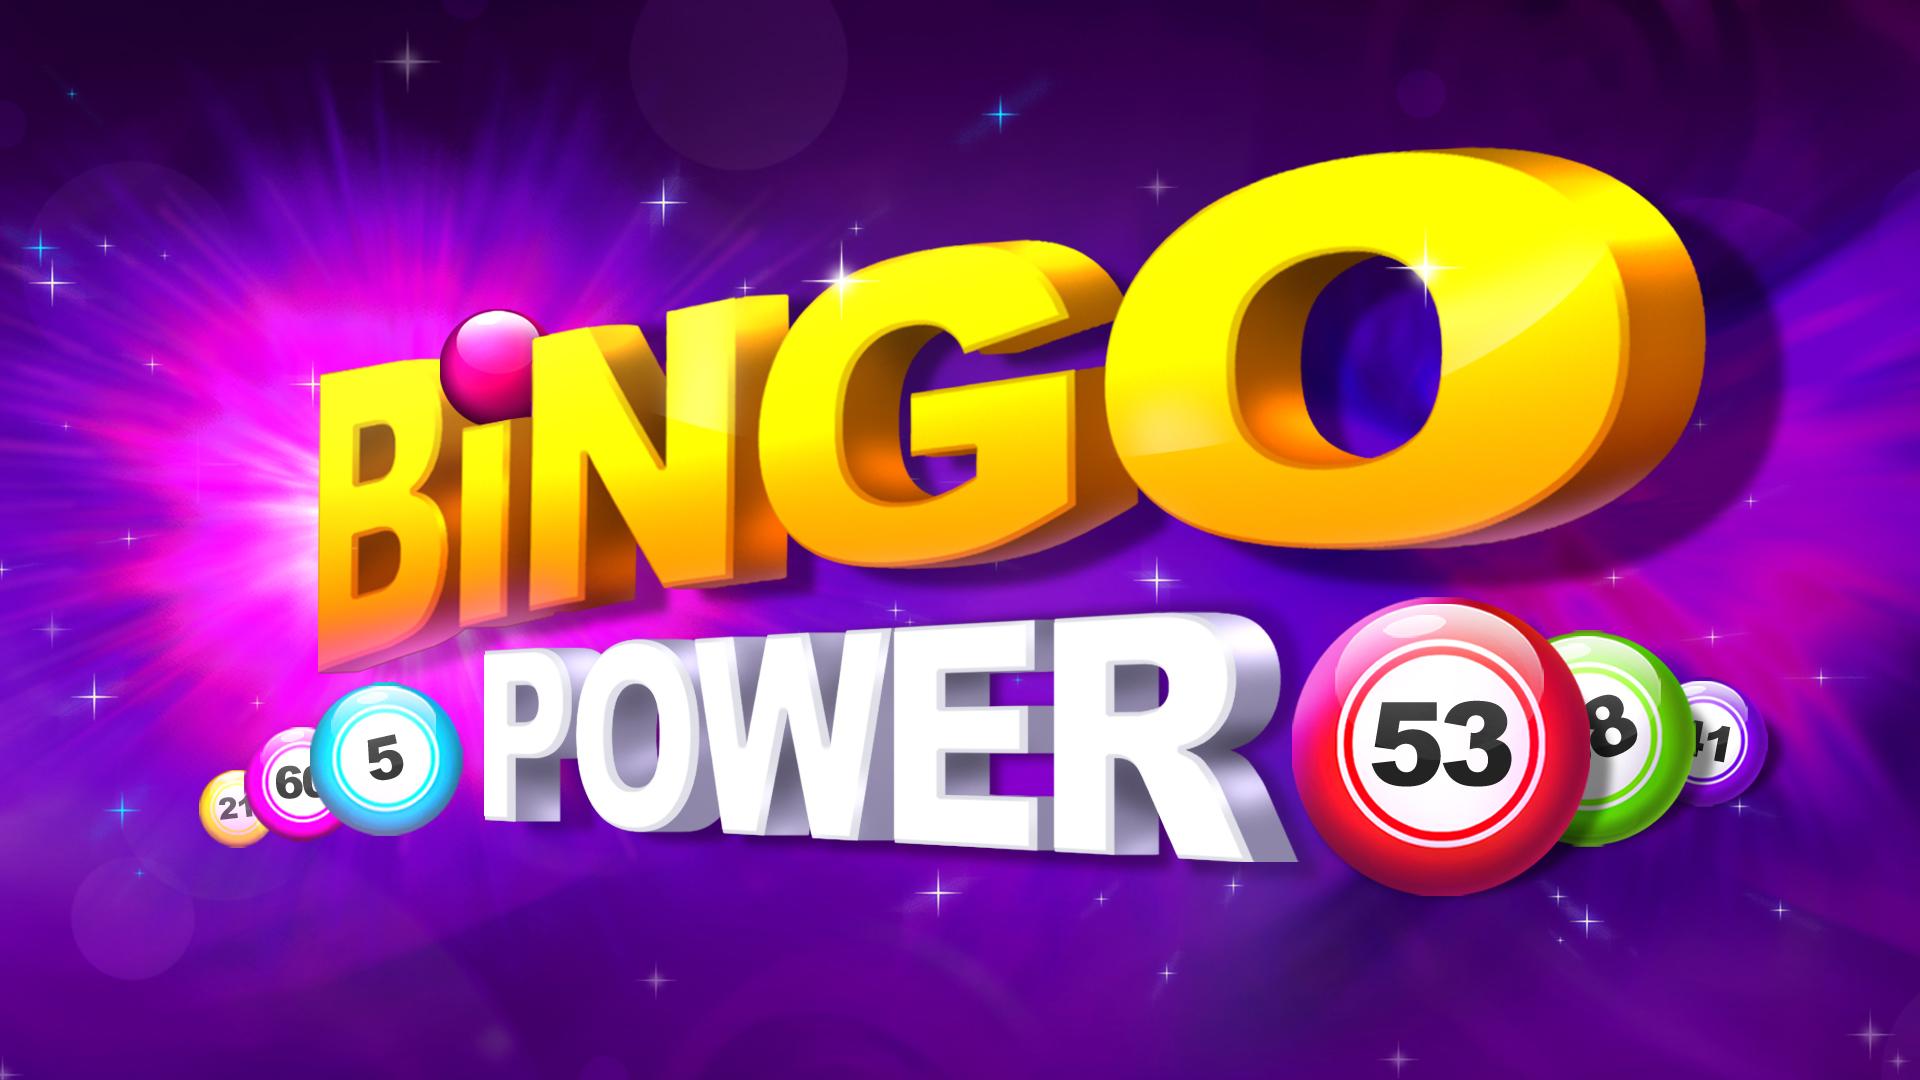 Bingo Power | Promotion pack | Online slot